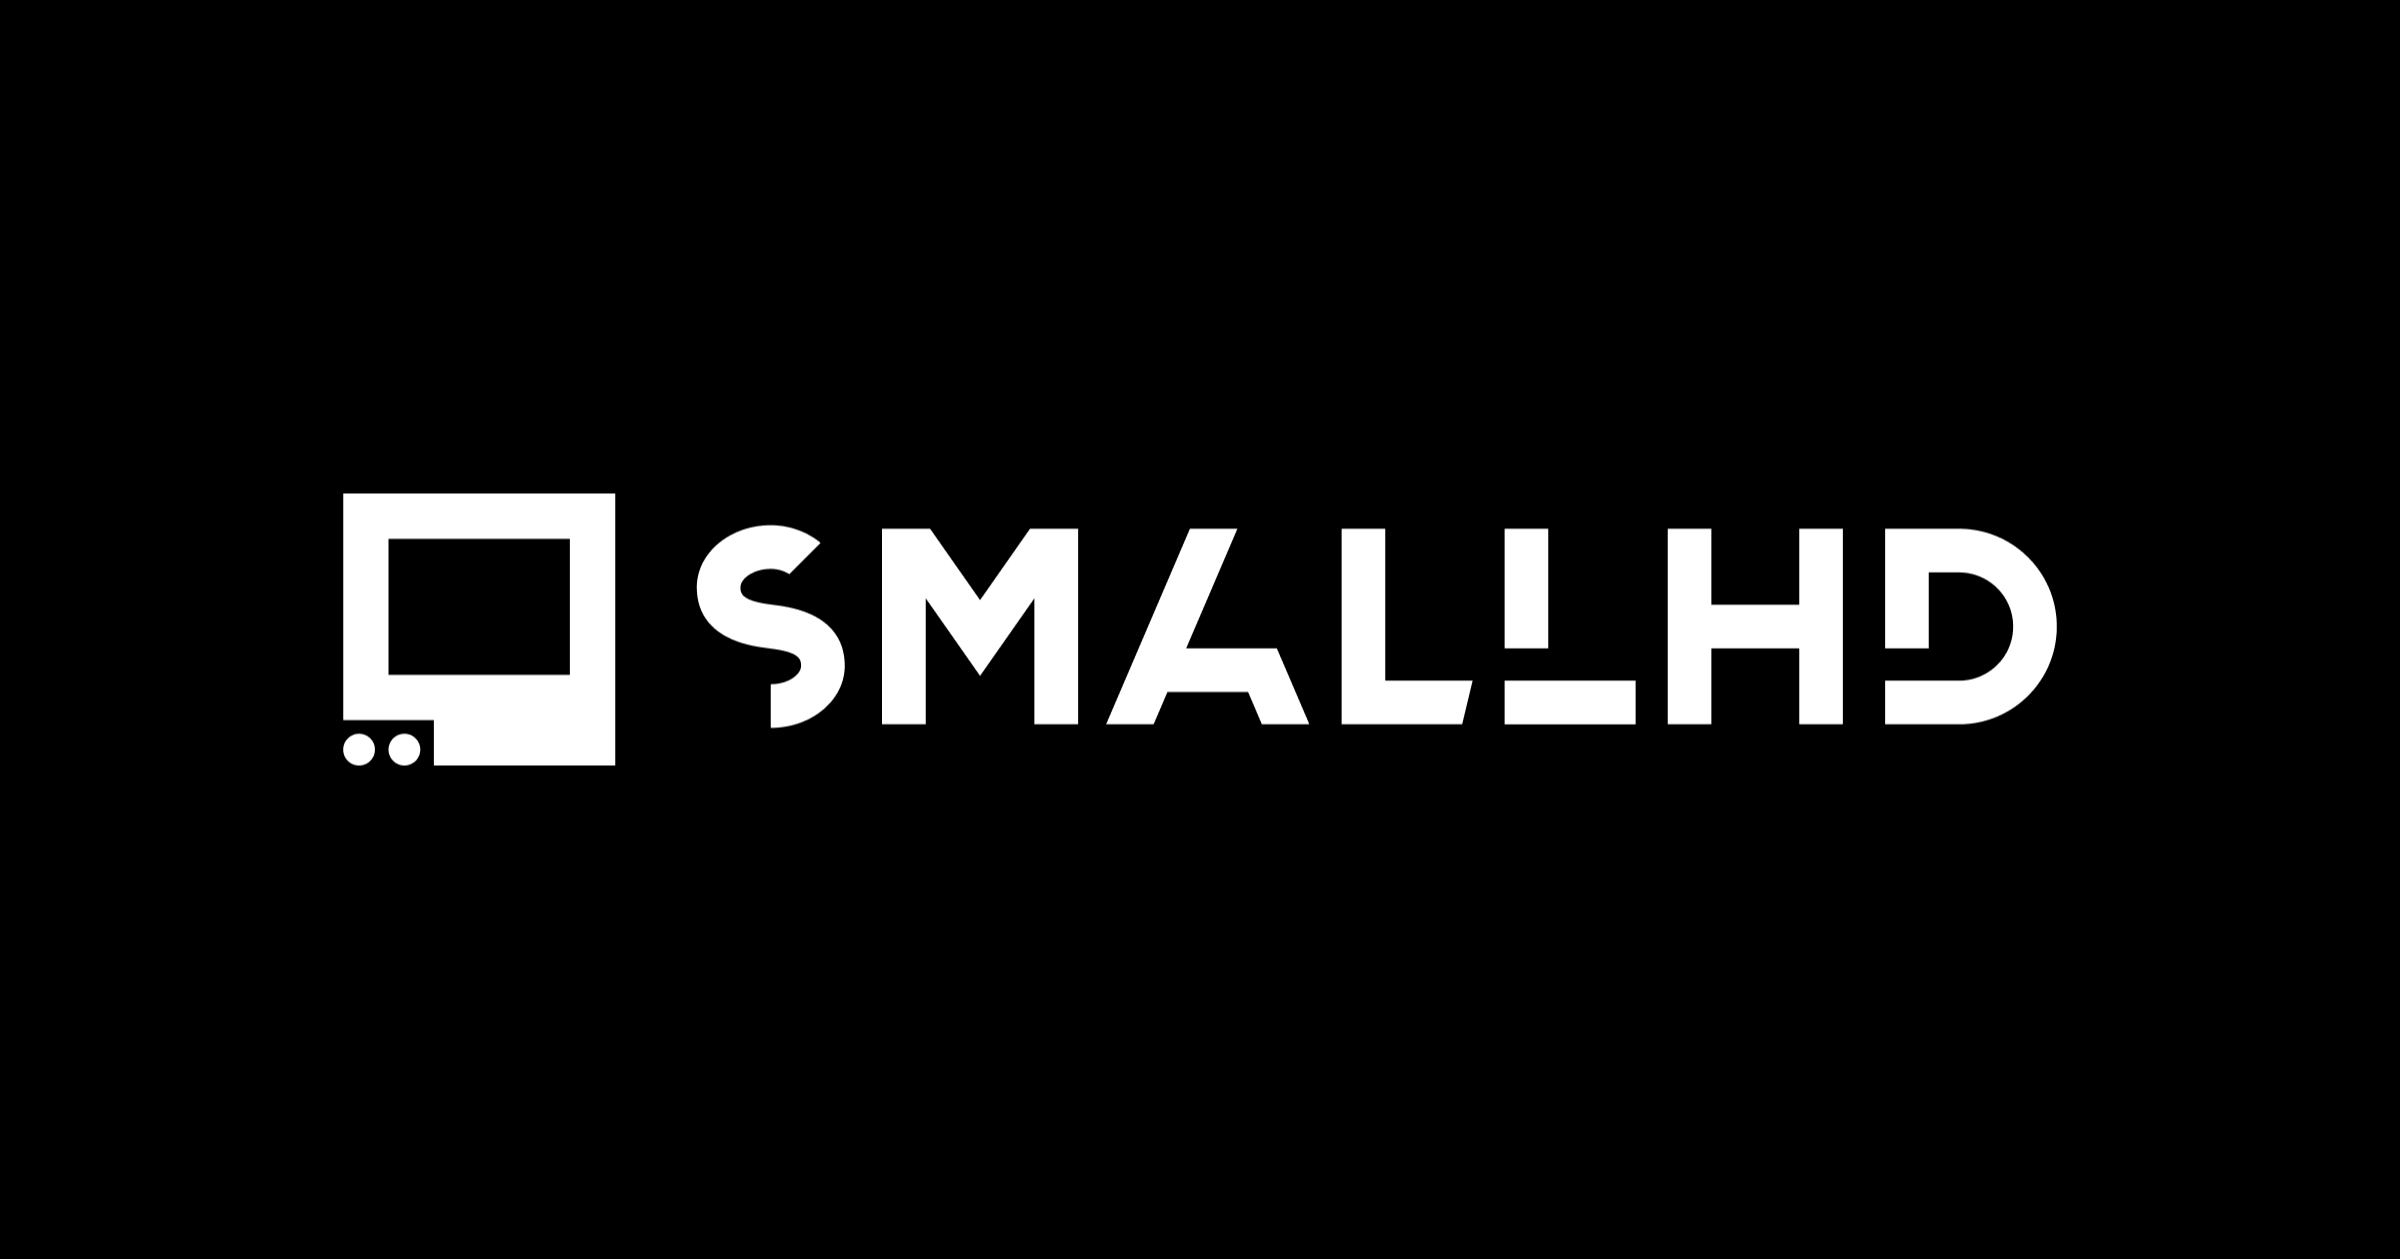 (c) Smallhd.com